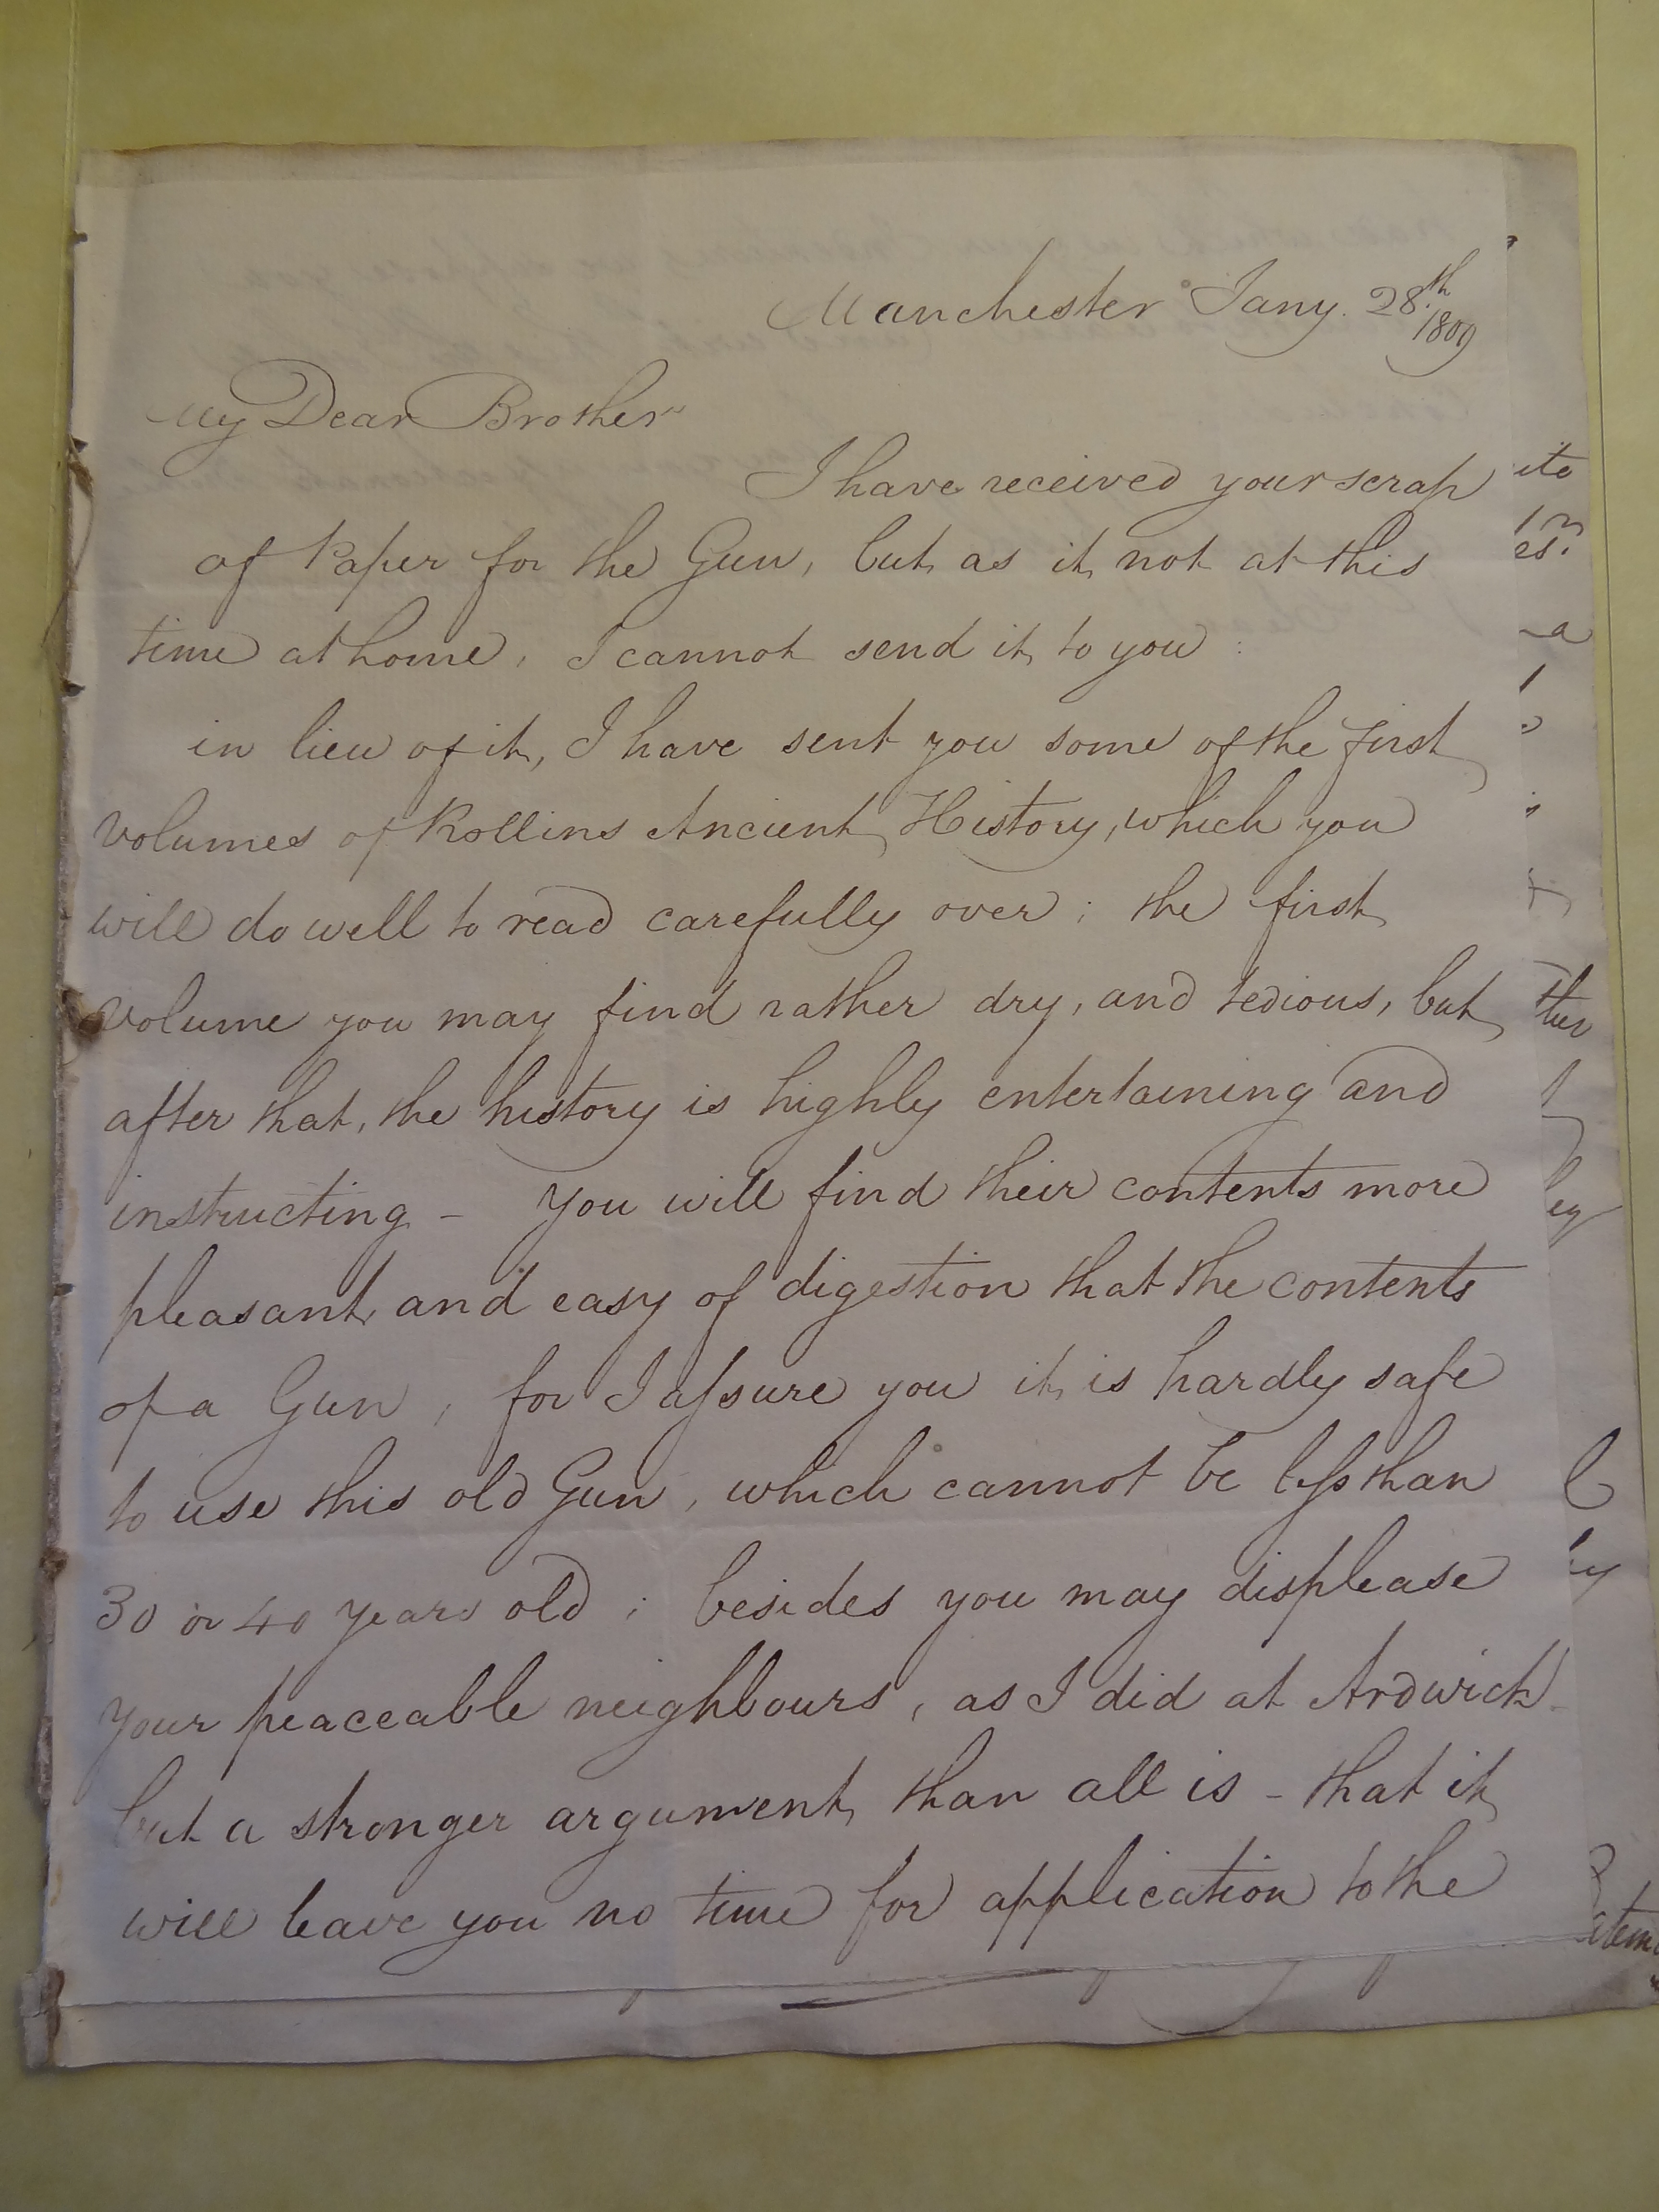 Image #1 of letter: William Bateman to Thomas Bateman (junior), 28 January 1809